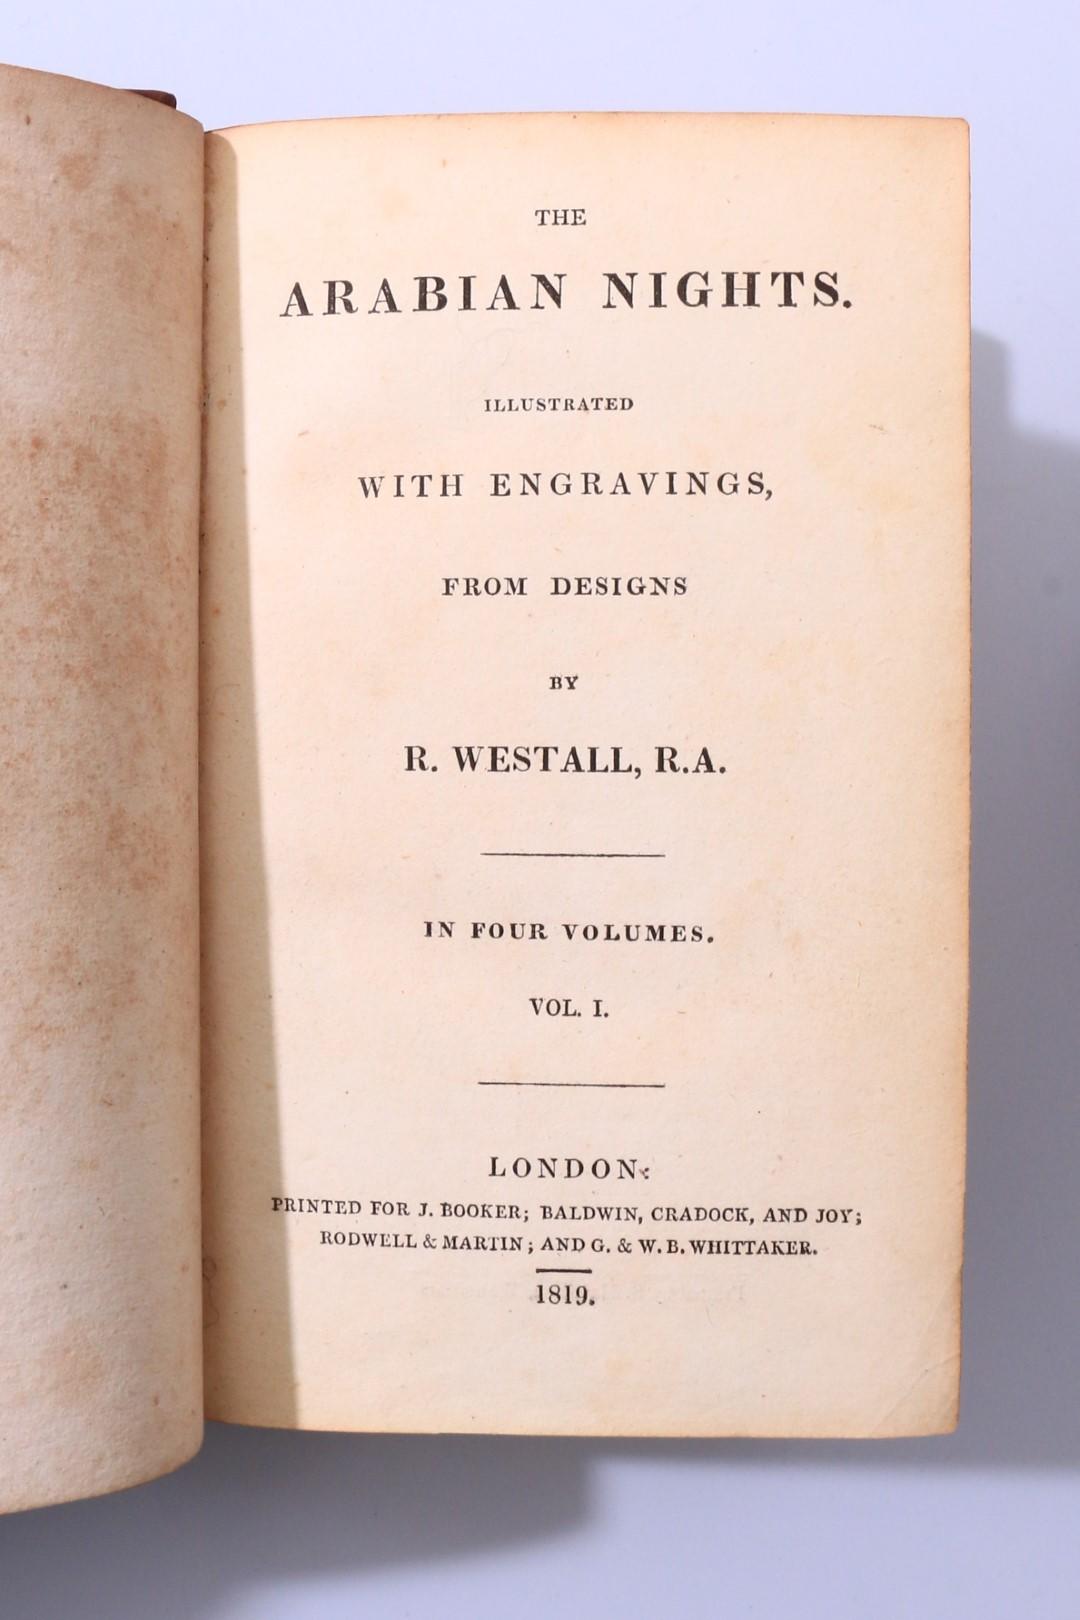 Anonymous - The Arabian Nights - J. Booker, Baldwin, Cradock, and Joy, 1819, First Edition.